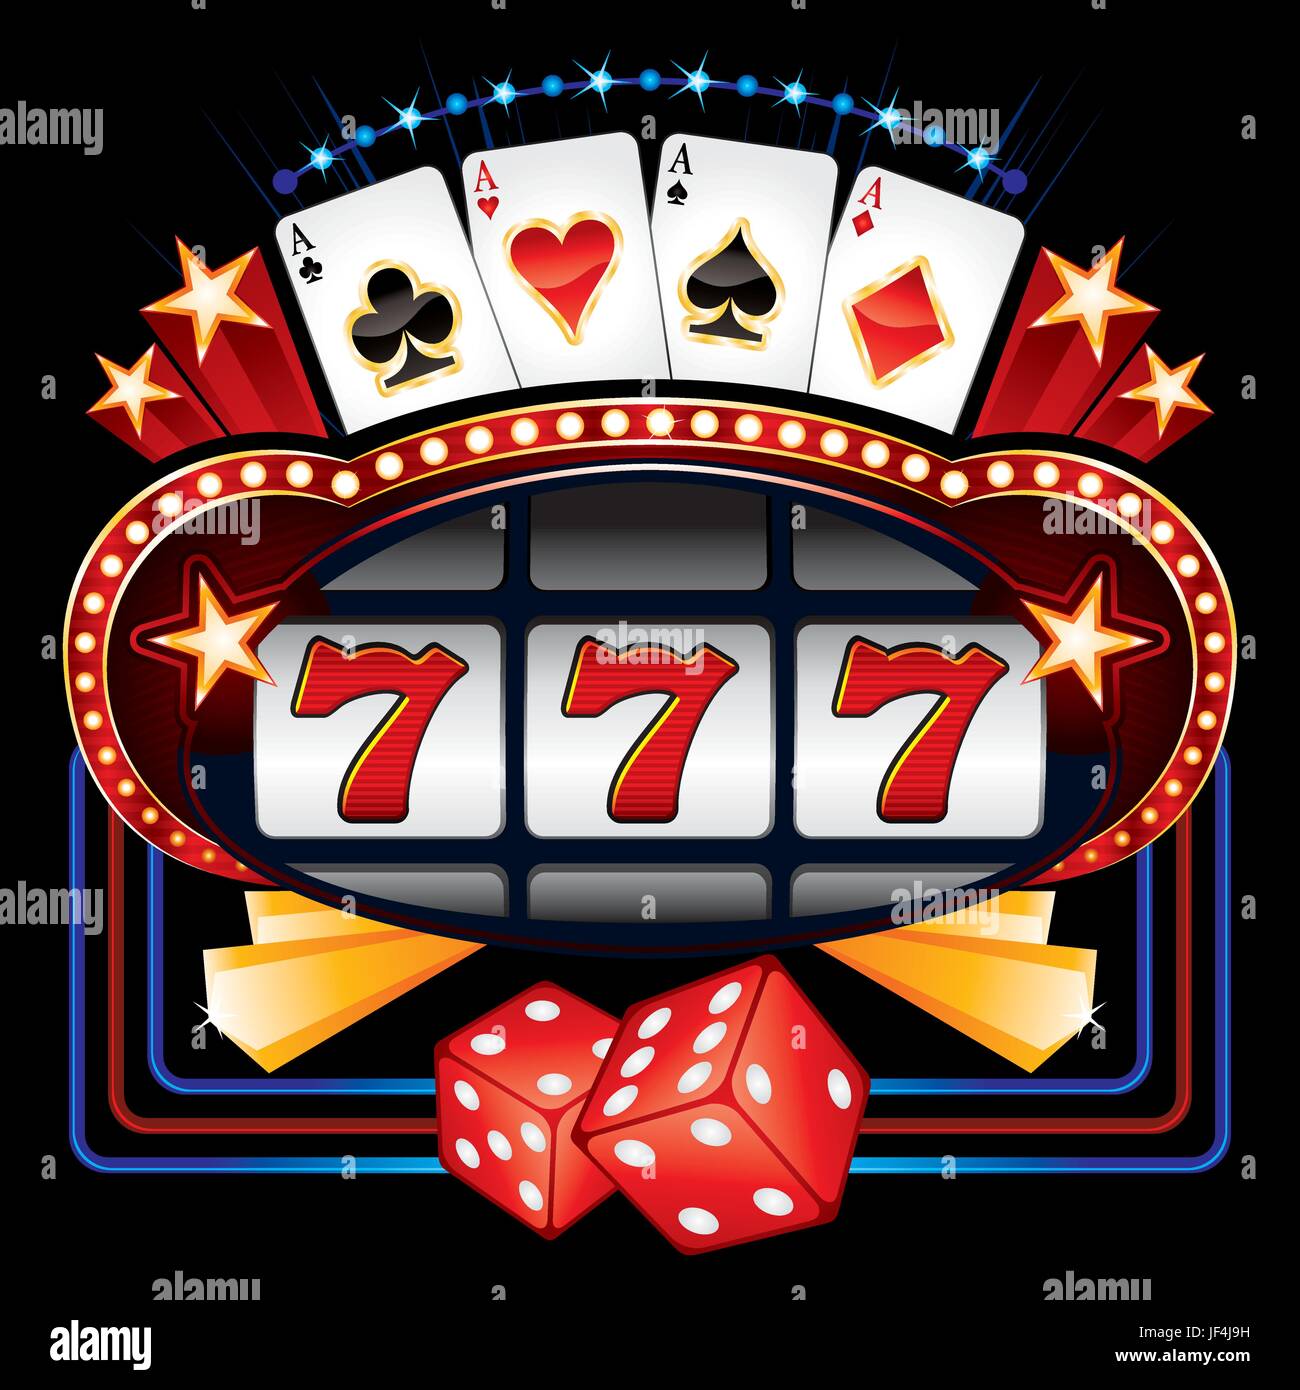 Casino, Slot, Jackpot, Roboter, Automaten, Maschine, Unterhaltung, Spiel  Stock-Vektorgrafik - Alamy